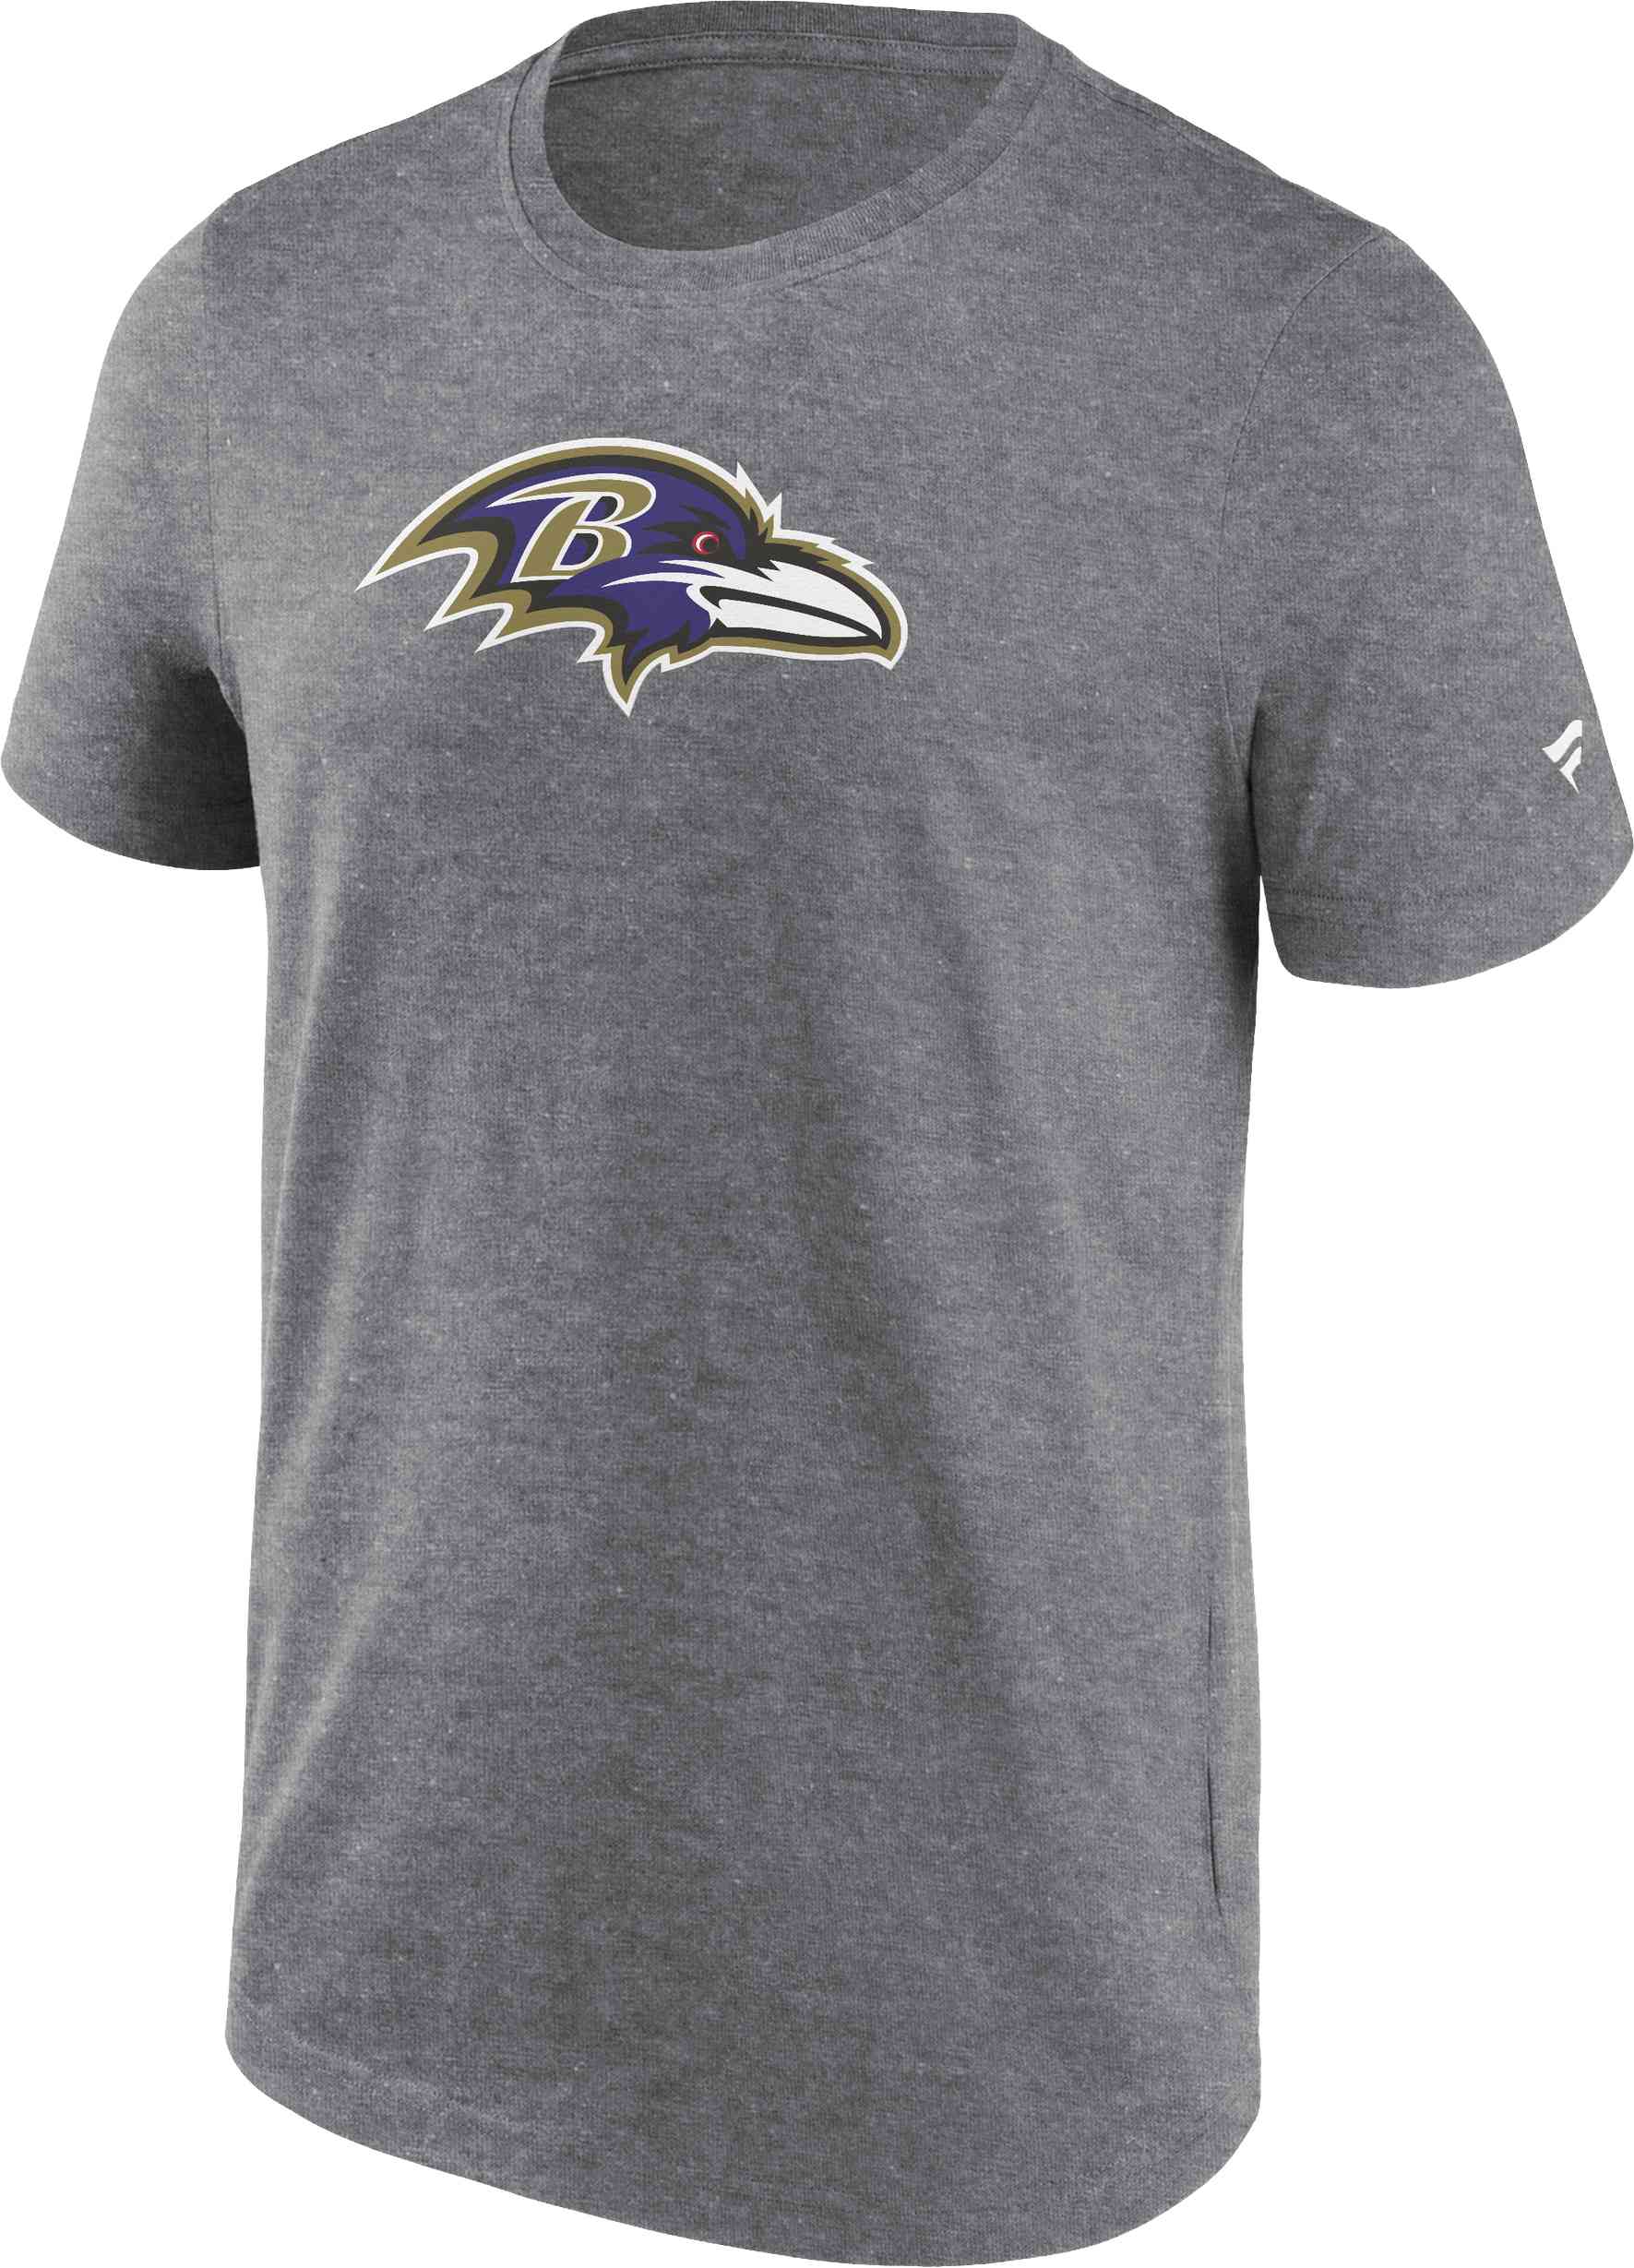 Fanatics - NFL Baltimore Ravens Primary Logo Graphic T-Shirt